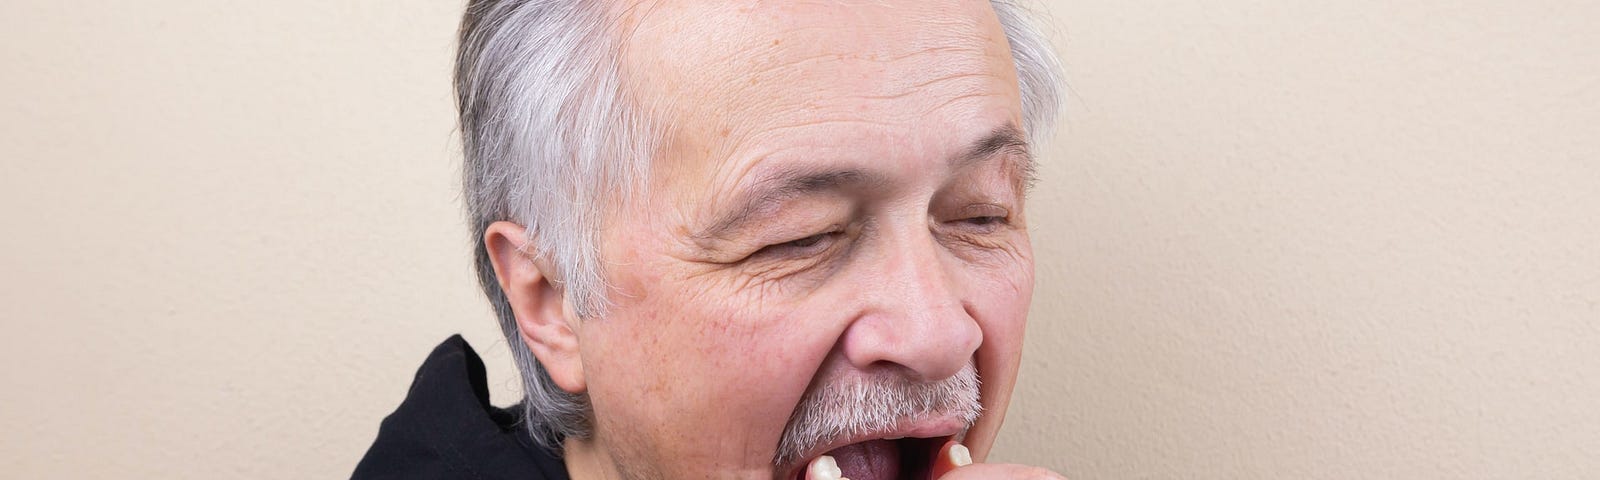 Man putting in his teeth